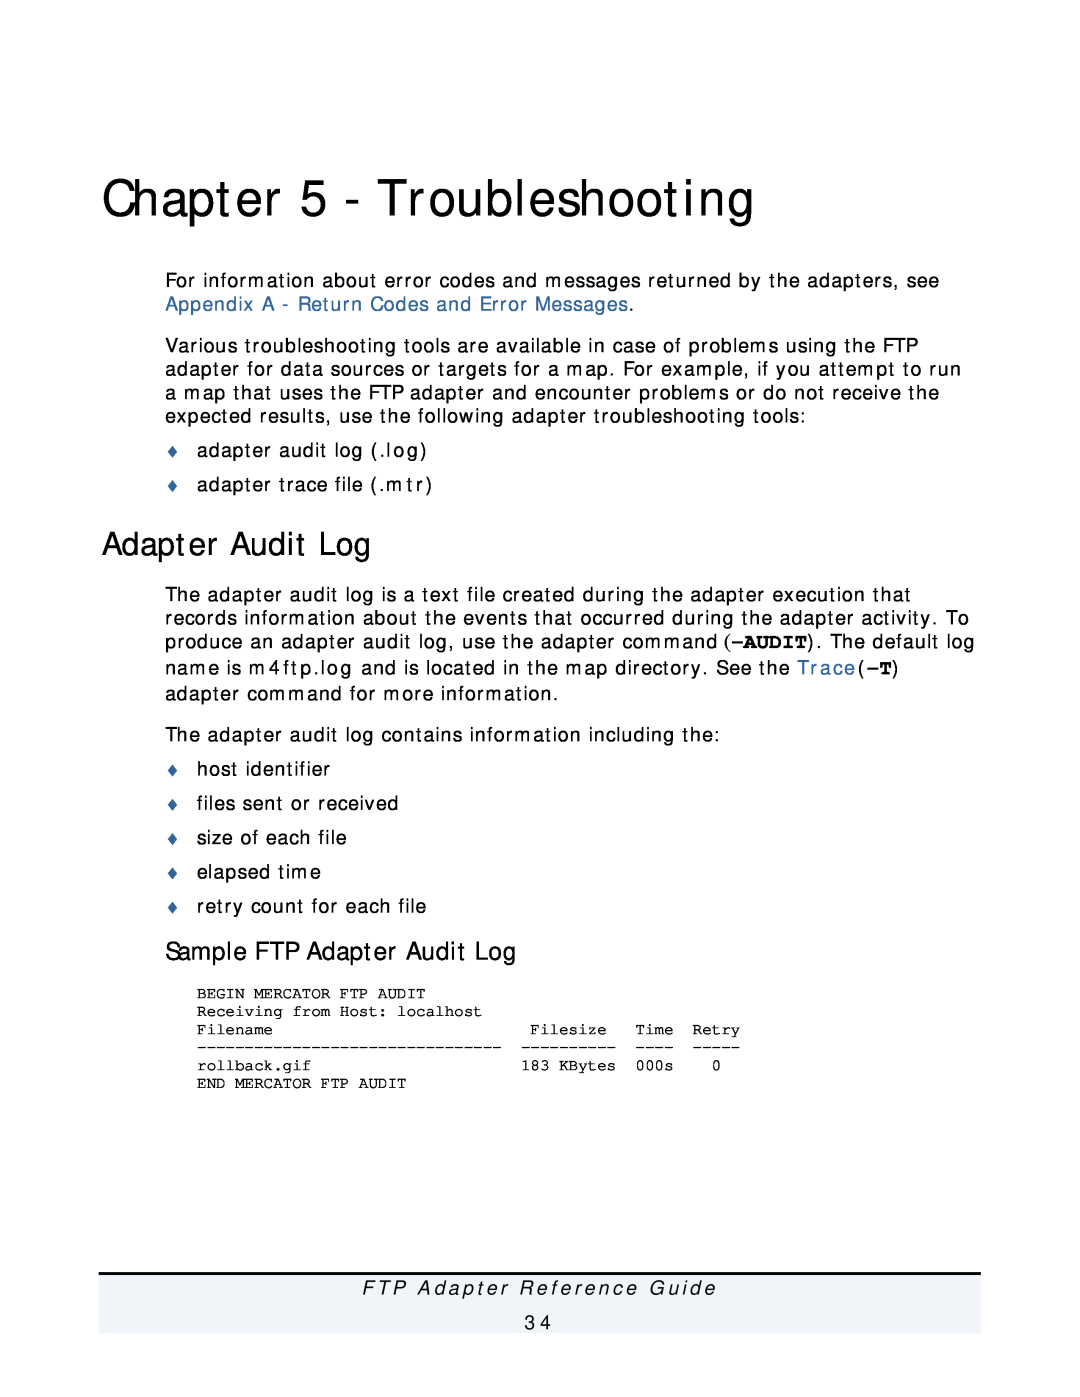 IBM manual Troubleshooting, Sample FTP Adapter Audit Log, F T P A d a p t e r R e f e r e n c e G u i d e 